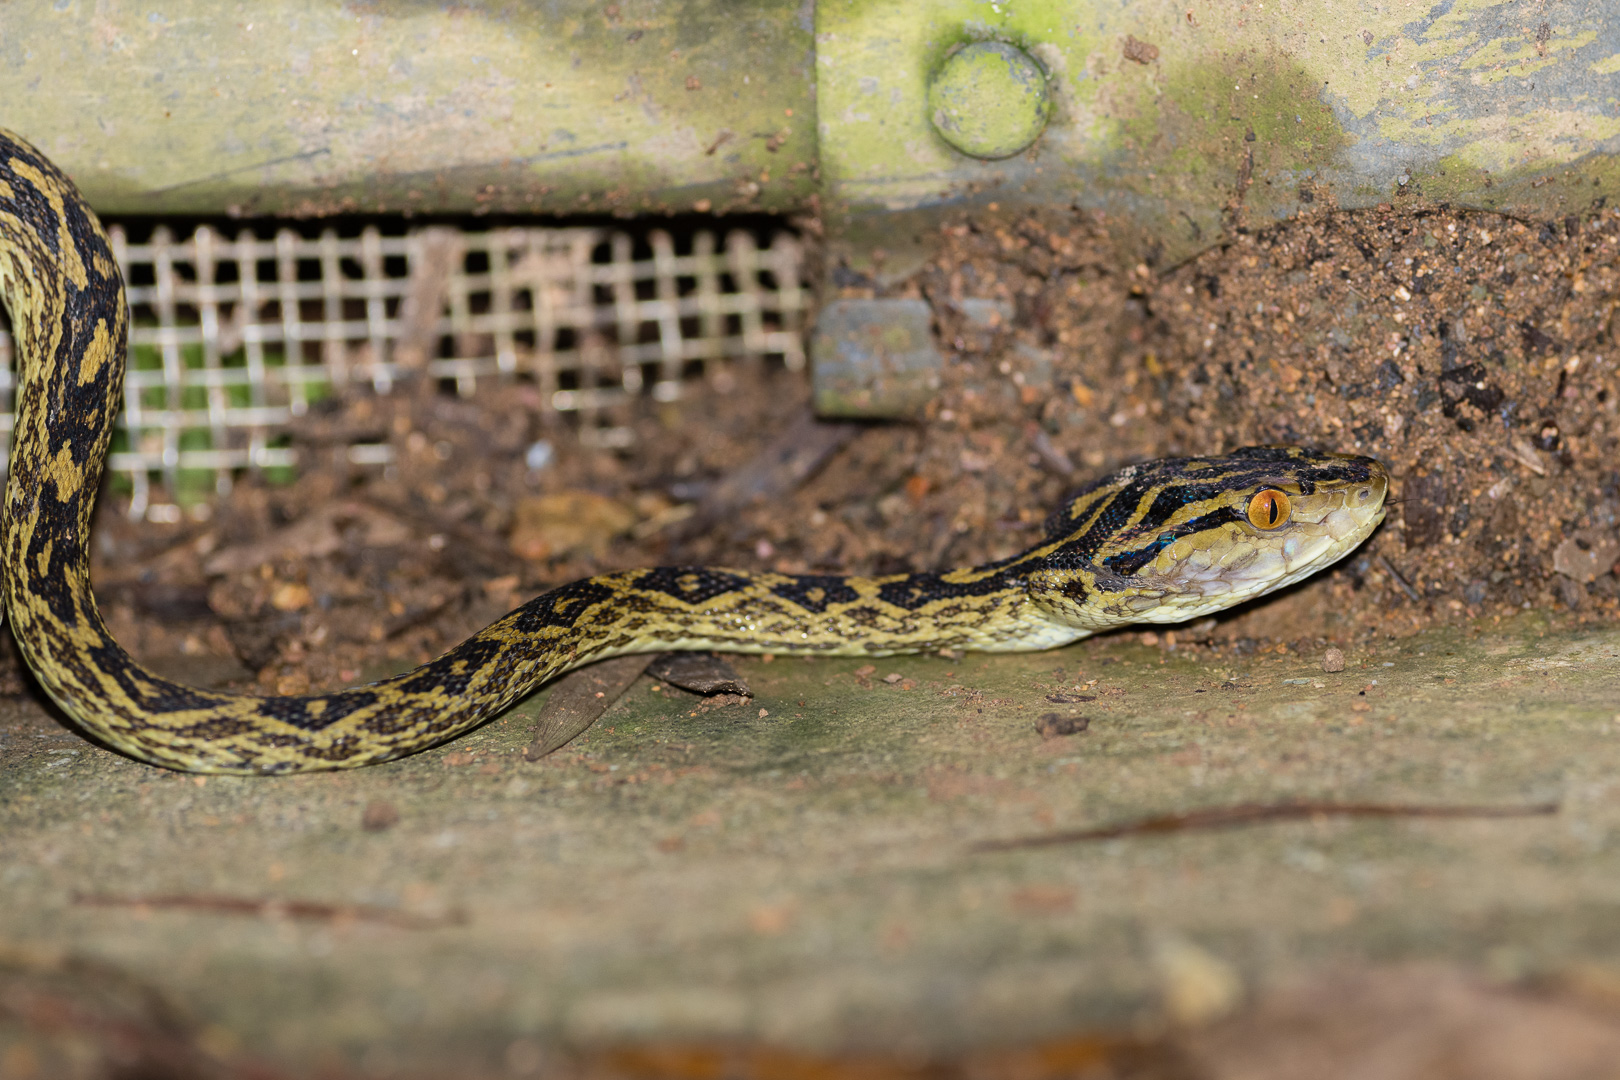 photo of a Habu snake